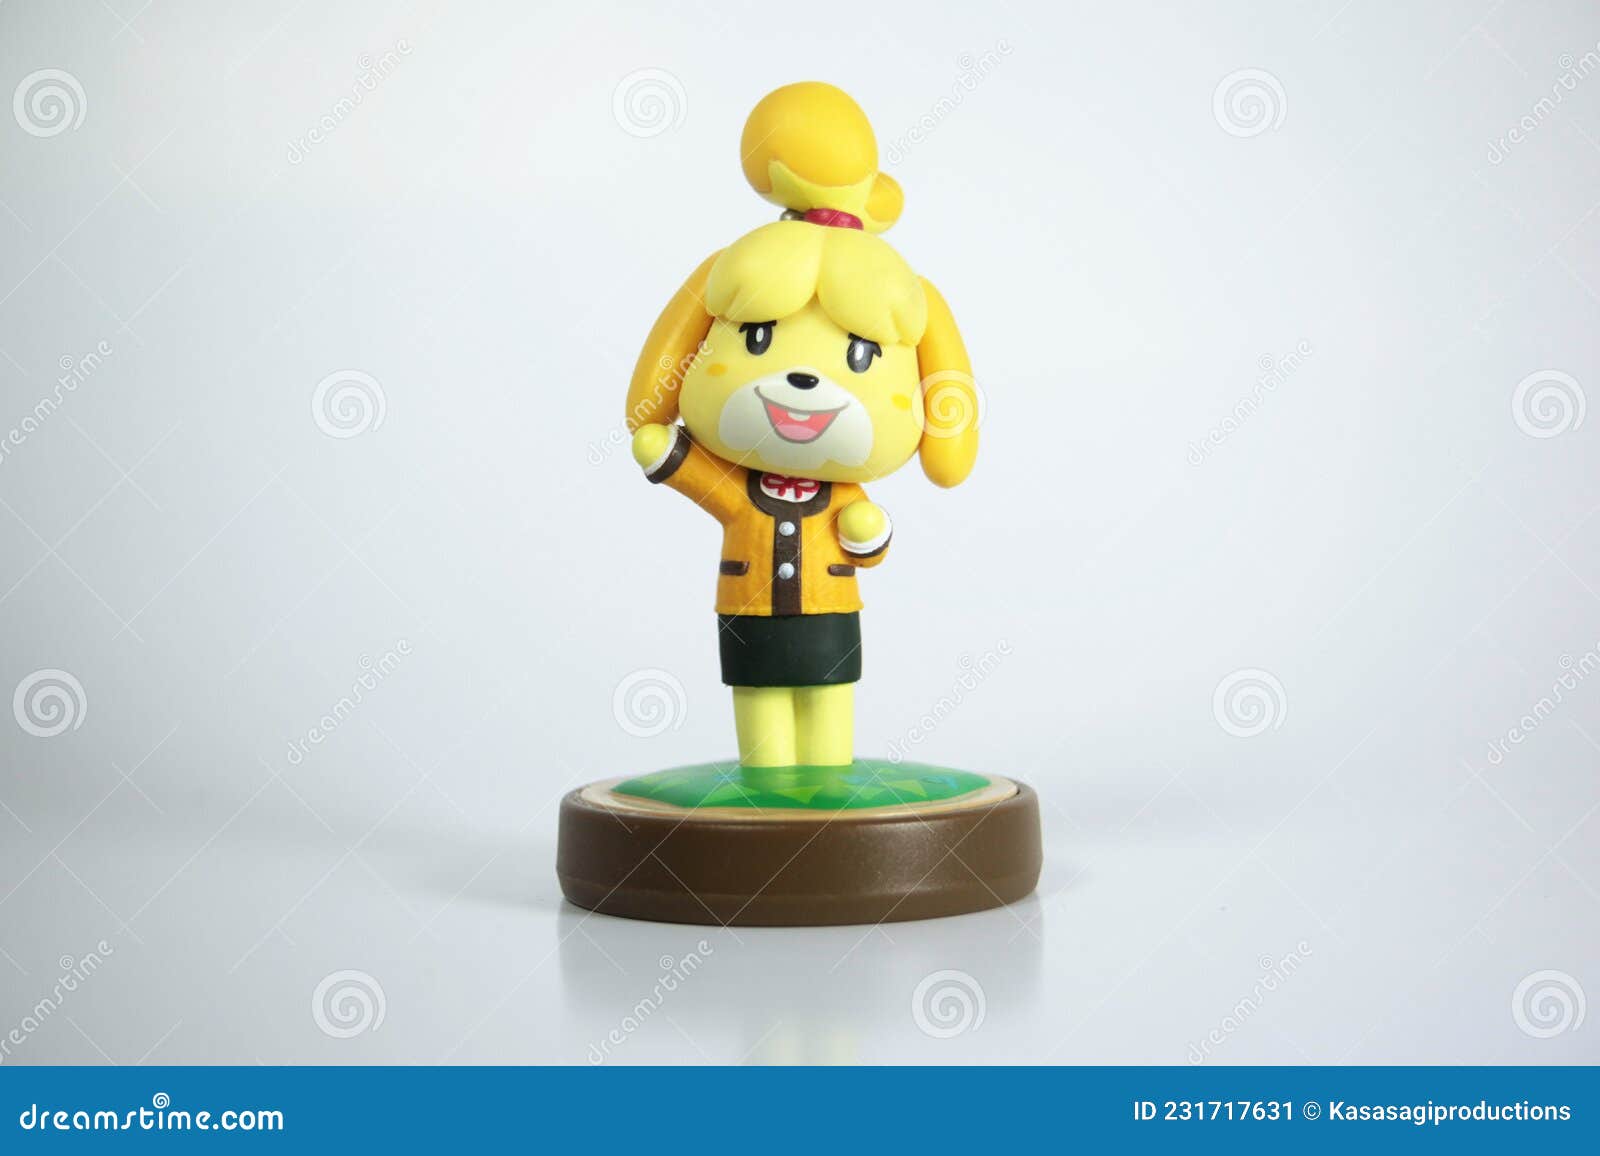 Nintendo`s Animal Crossing Video Game Character Isabelle Amiibo Figure Photo - Image of japanese, mascot: 231717631